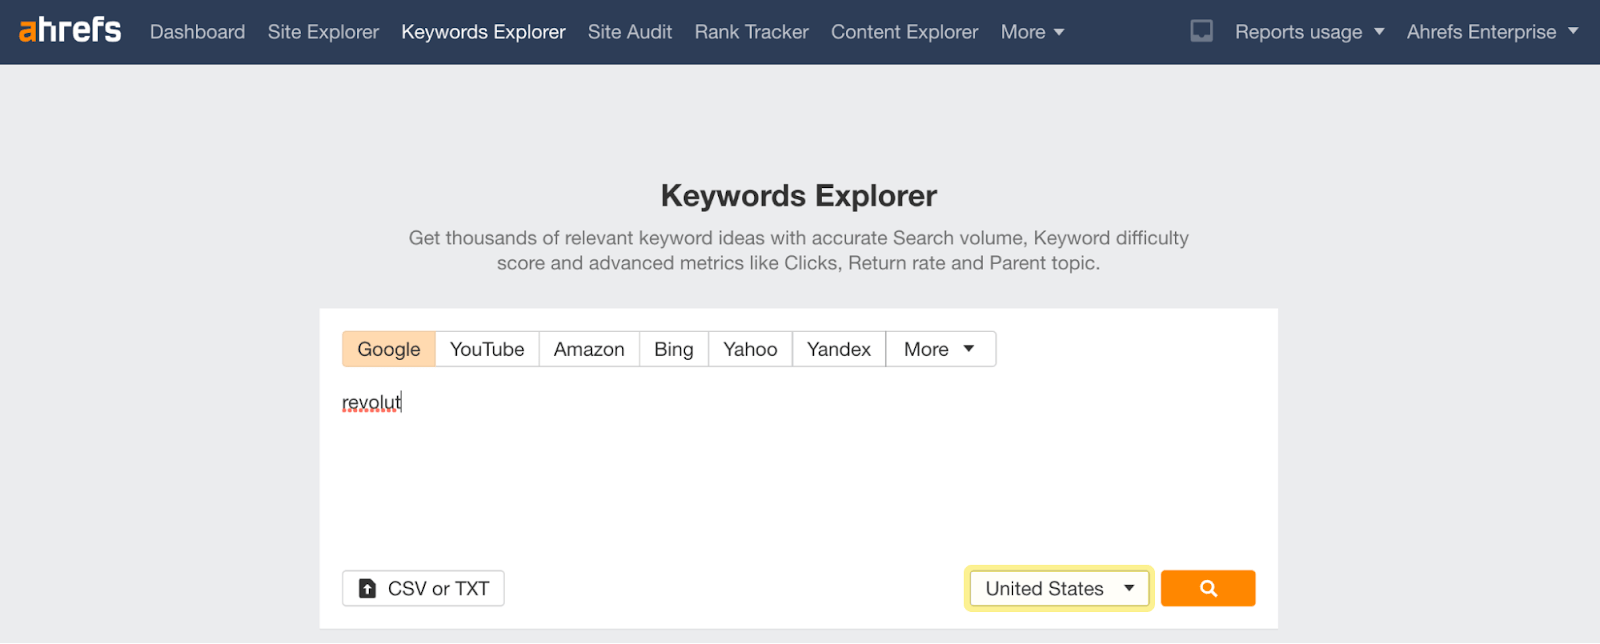 Ahrefs' Keywords Explorer tool